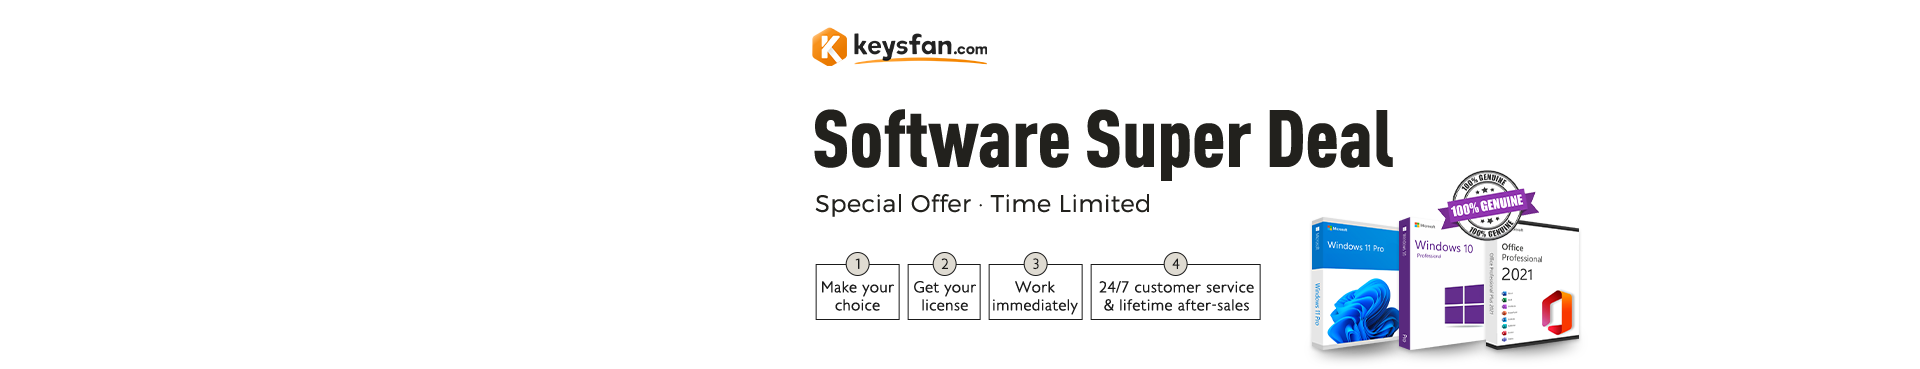 Software Super Deal